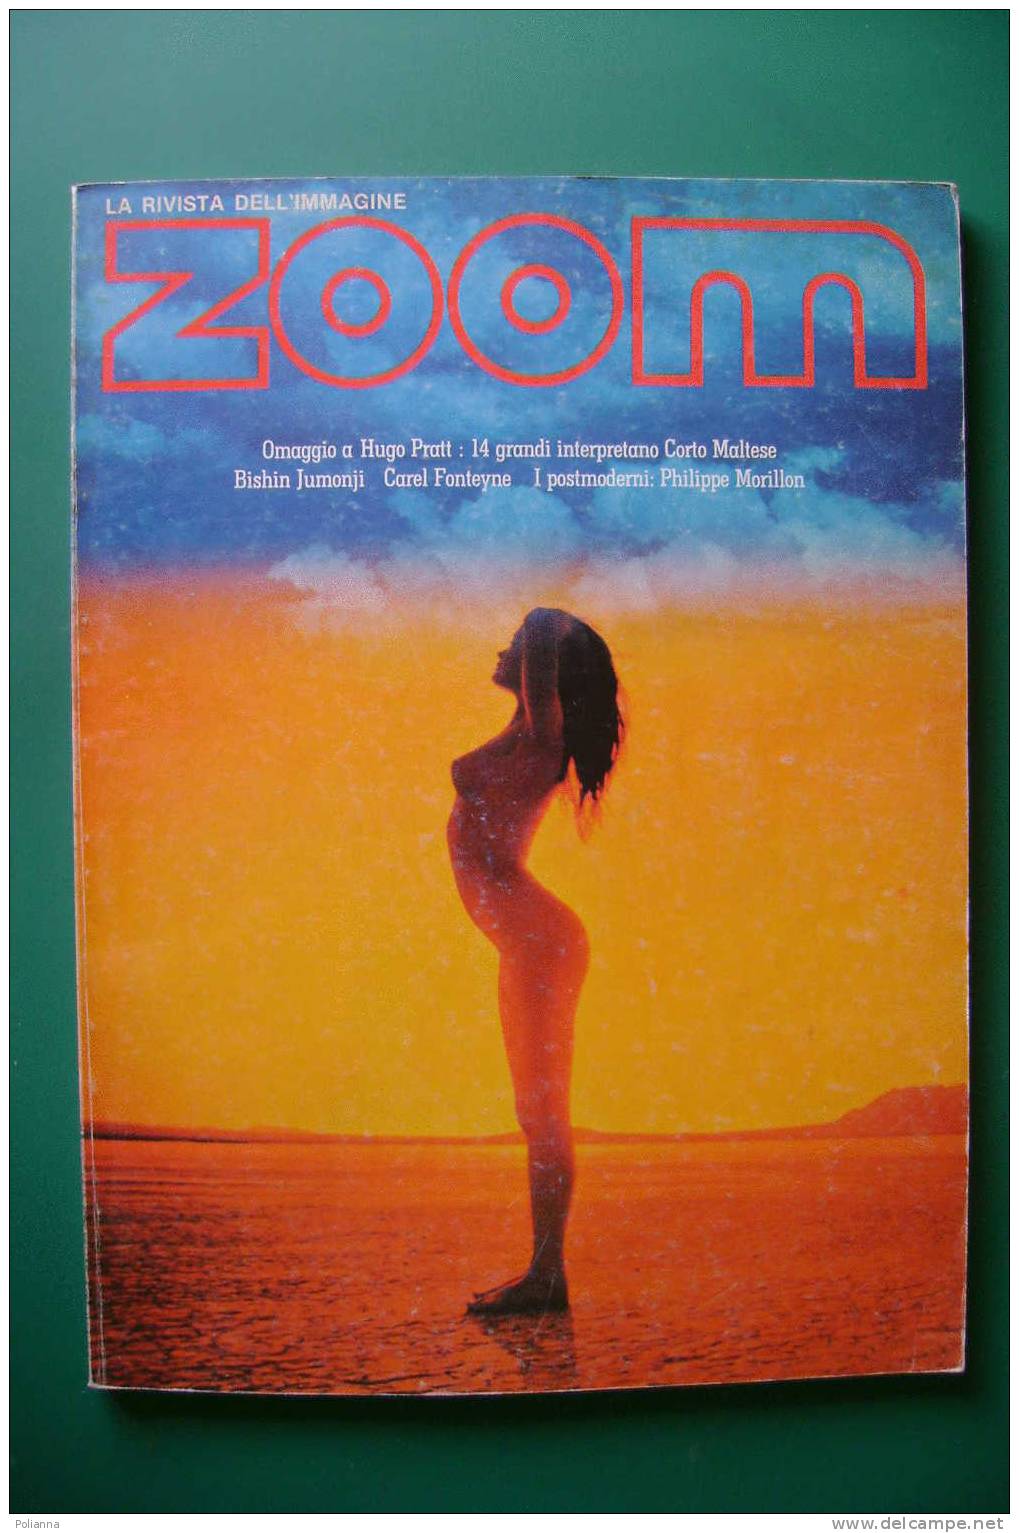 PDT/13 Rivista Dell´immagine - ZOOM N.14 - 1981/FOTOGRAFIA/HUGO PRATT, CORTO MALTESE/BISHIN JUMONJI/CAREL FONTEYNE - Art, Design, Decoration